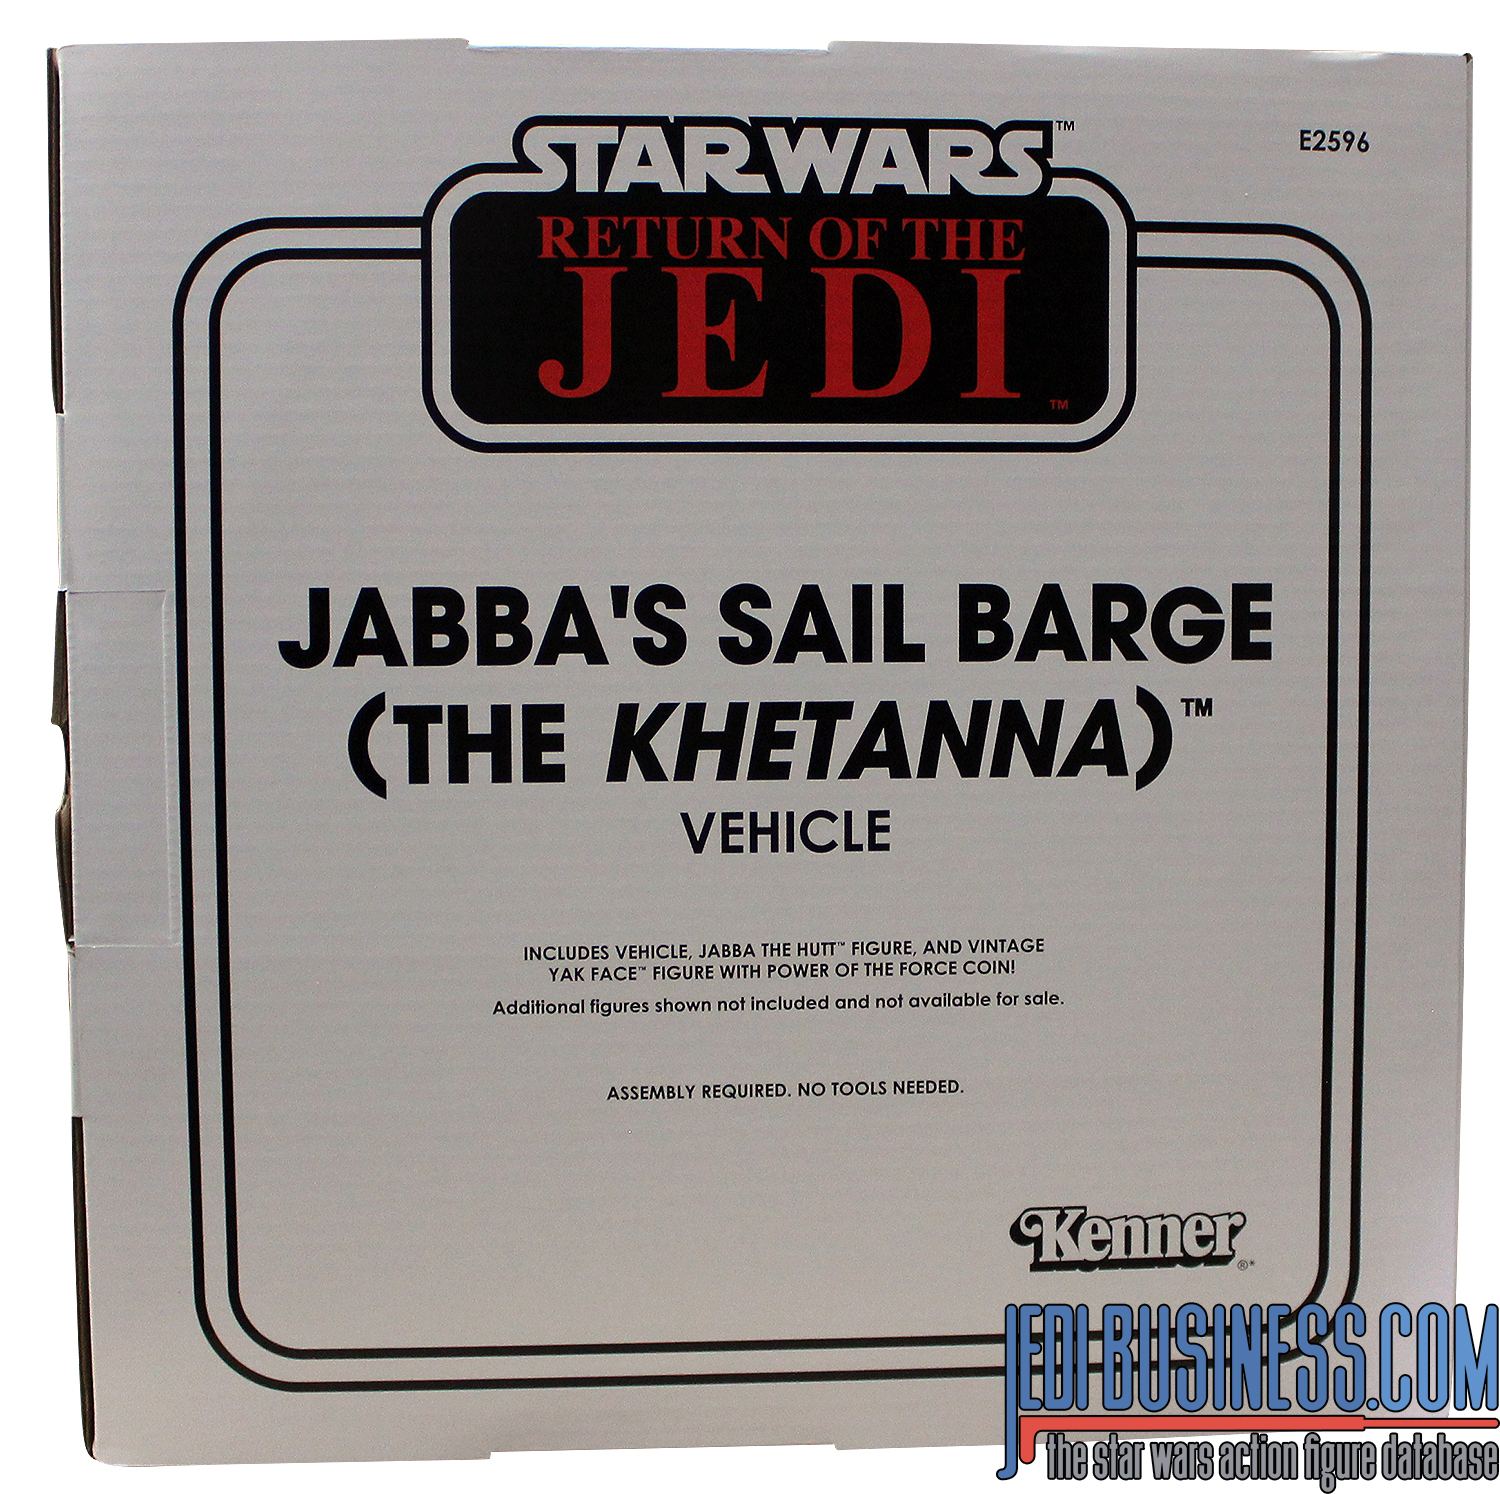 Jabba's Sail Barge Khetanna